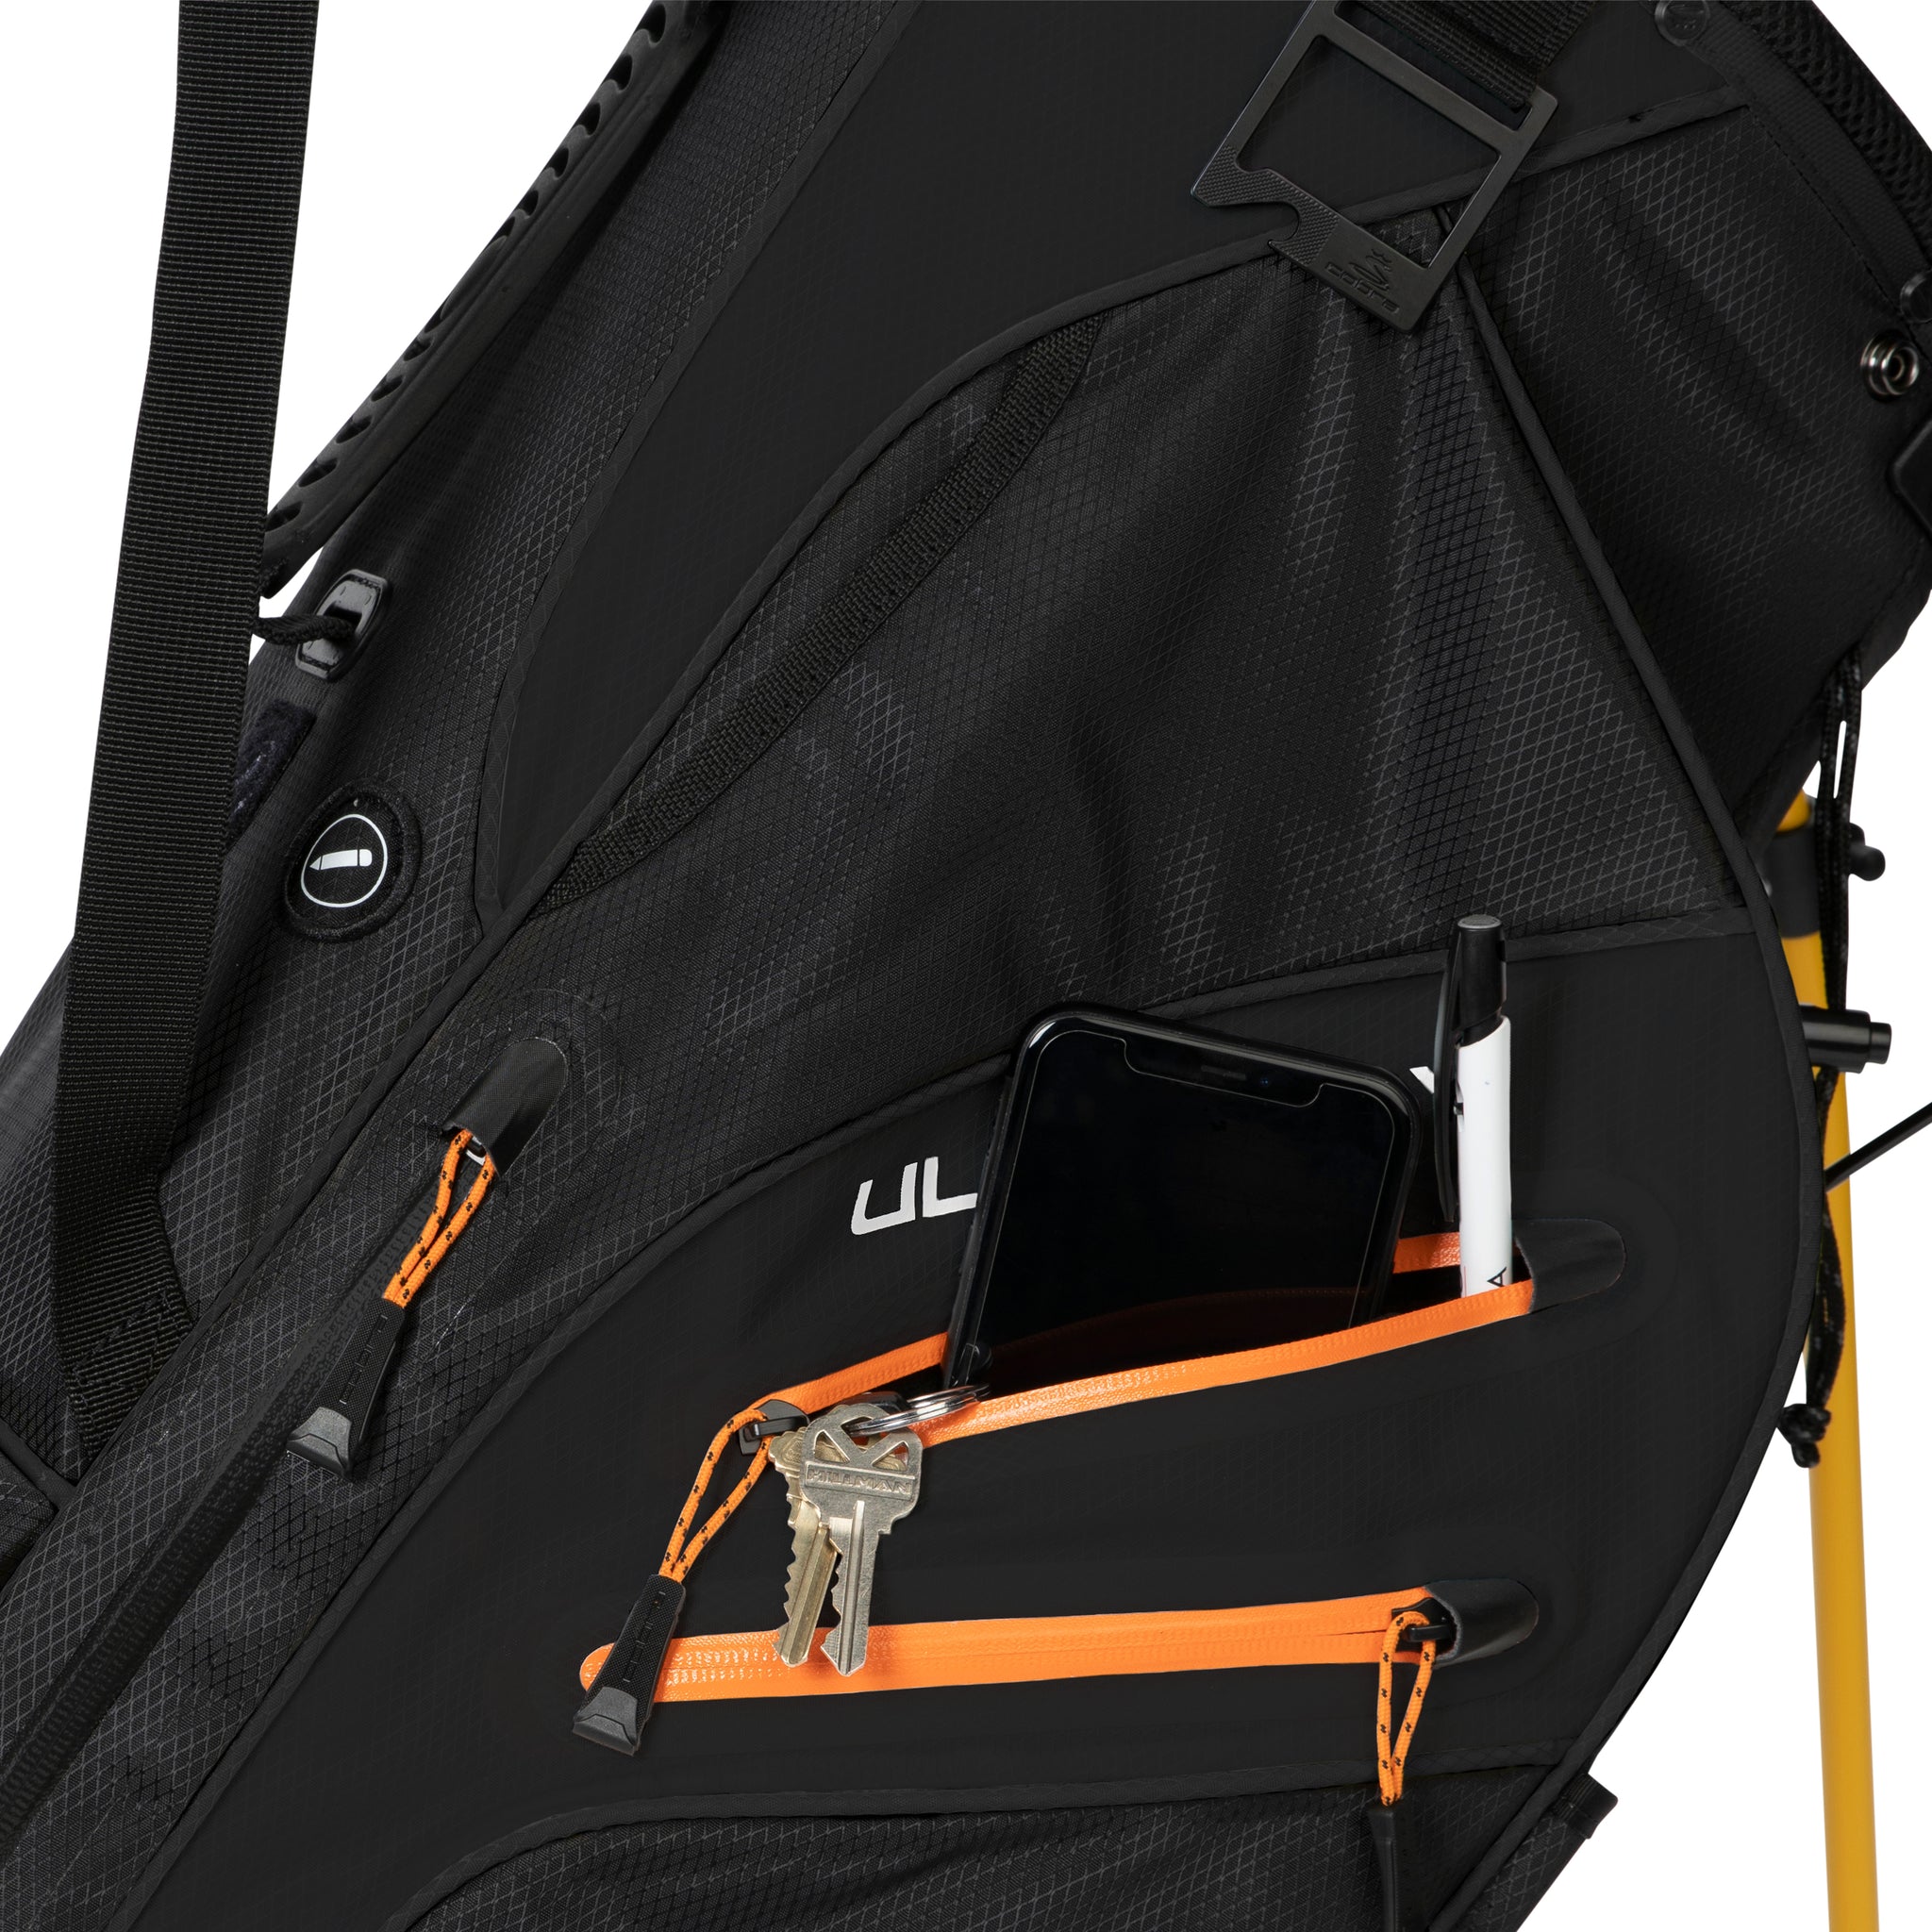 Cobra Golf Ultradry Pro Stand Bag